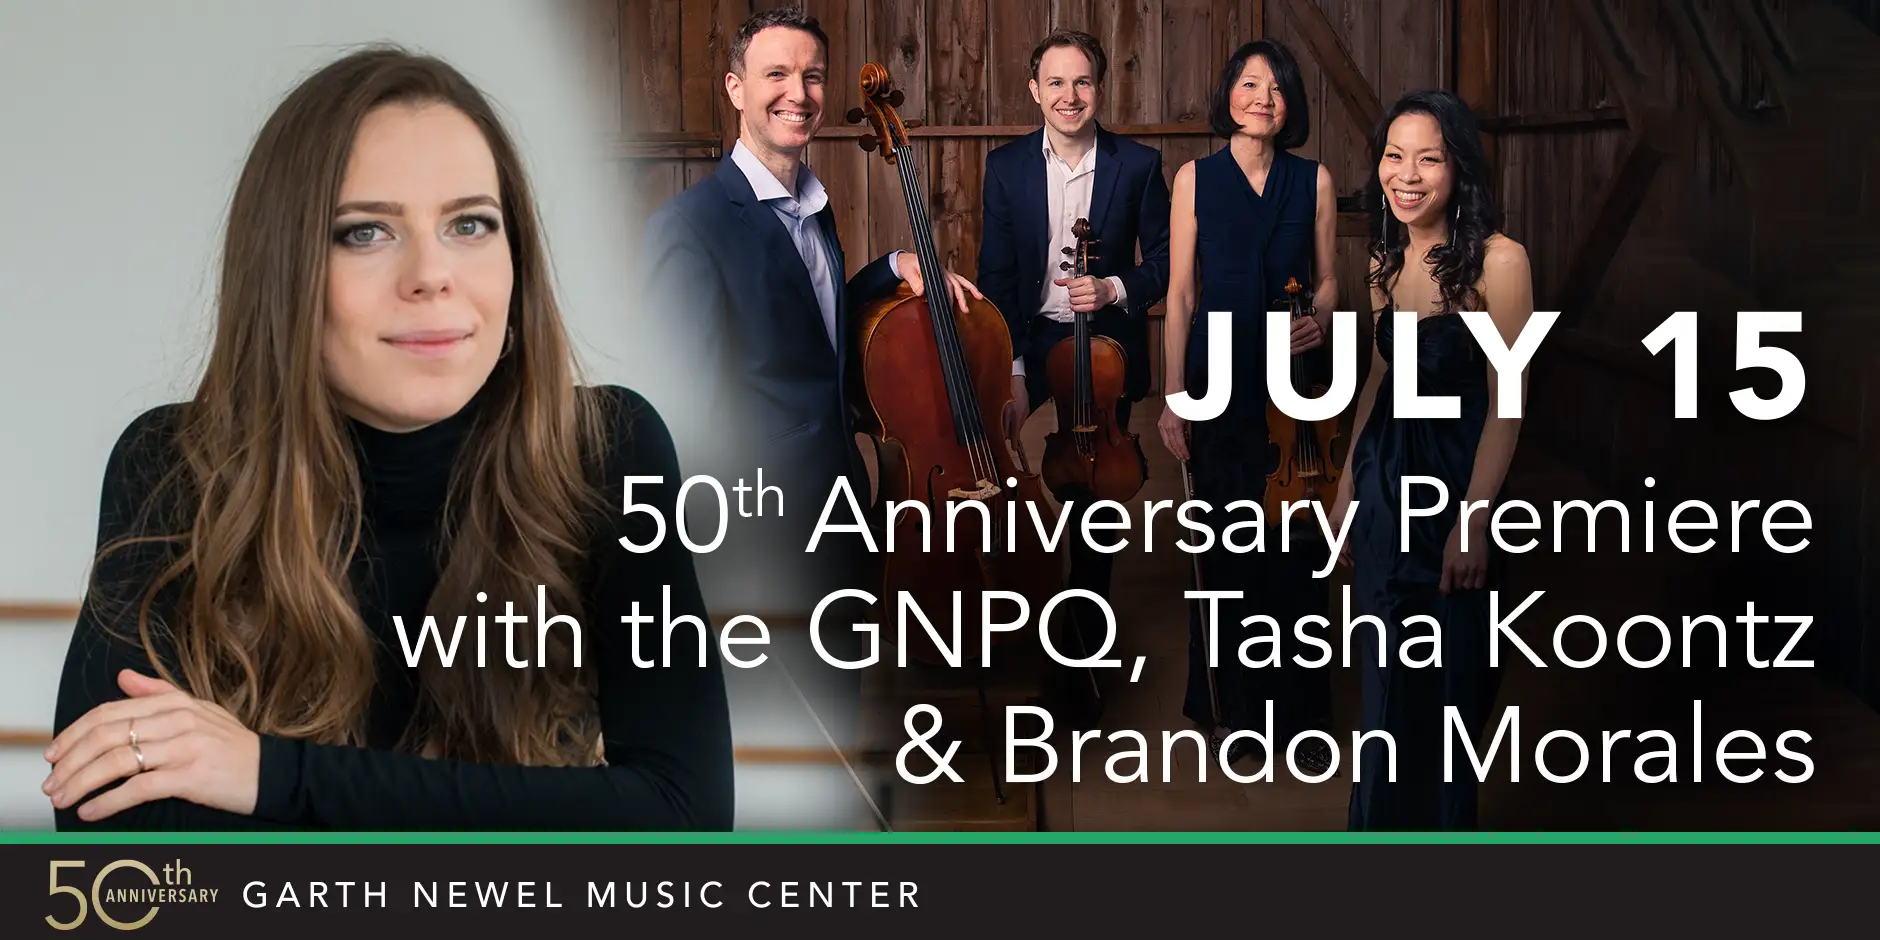 July 15 - 50th Anniversary Premiere with the GNPQ, Tasha Koontz & Brandon Morales